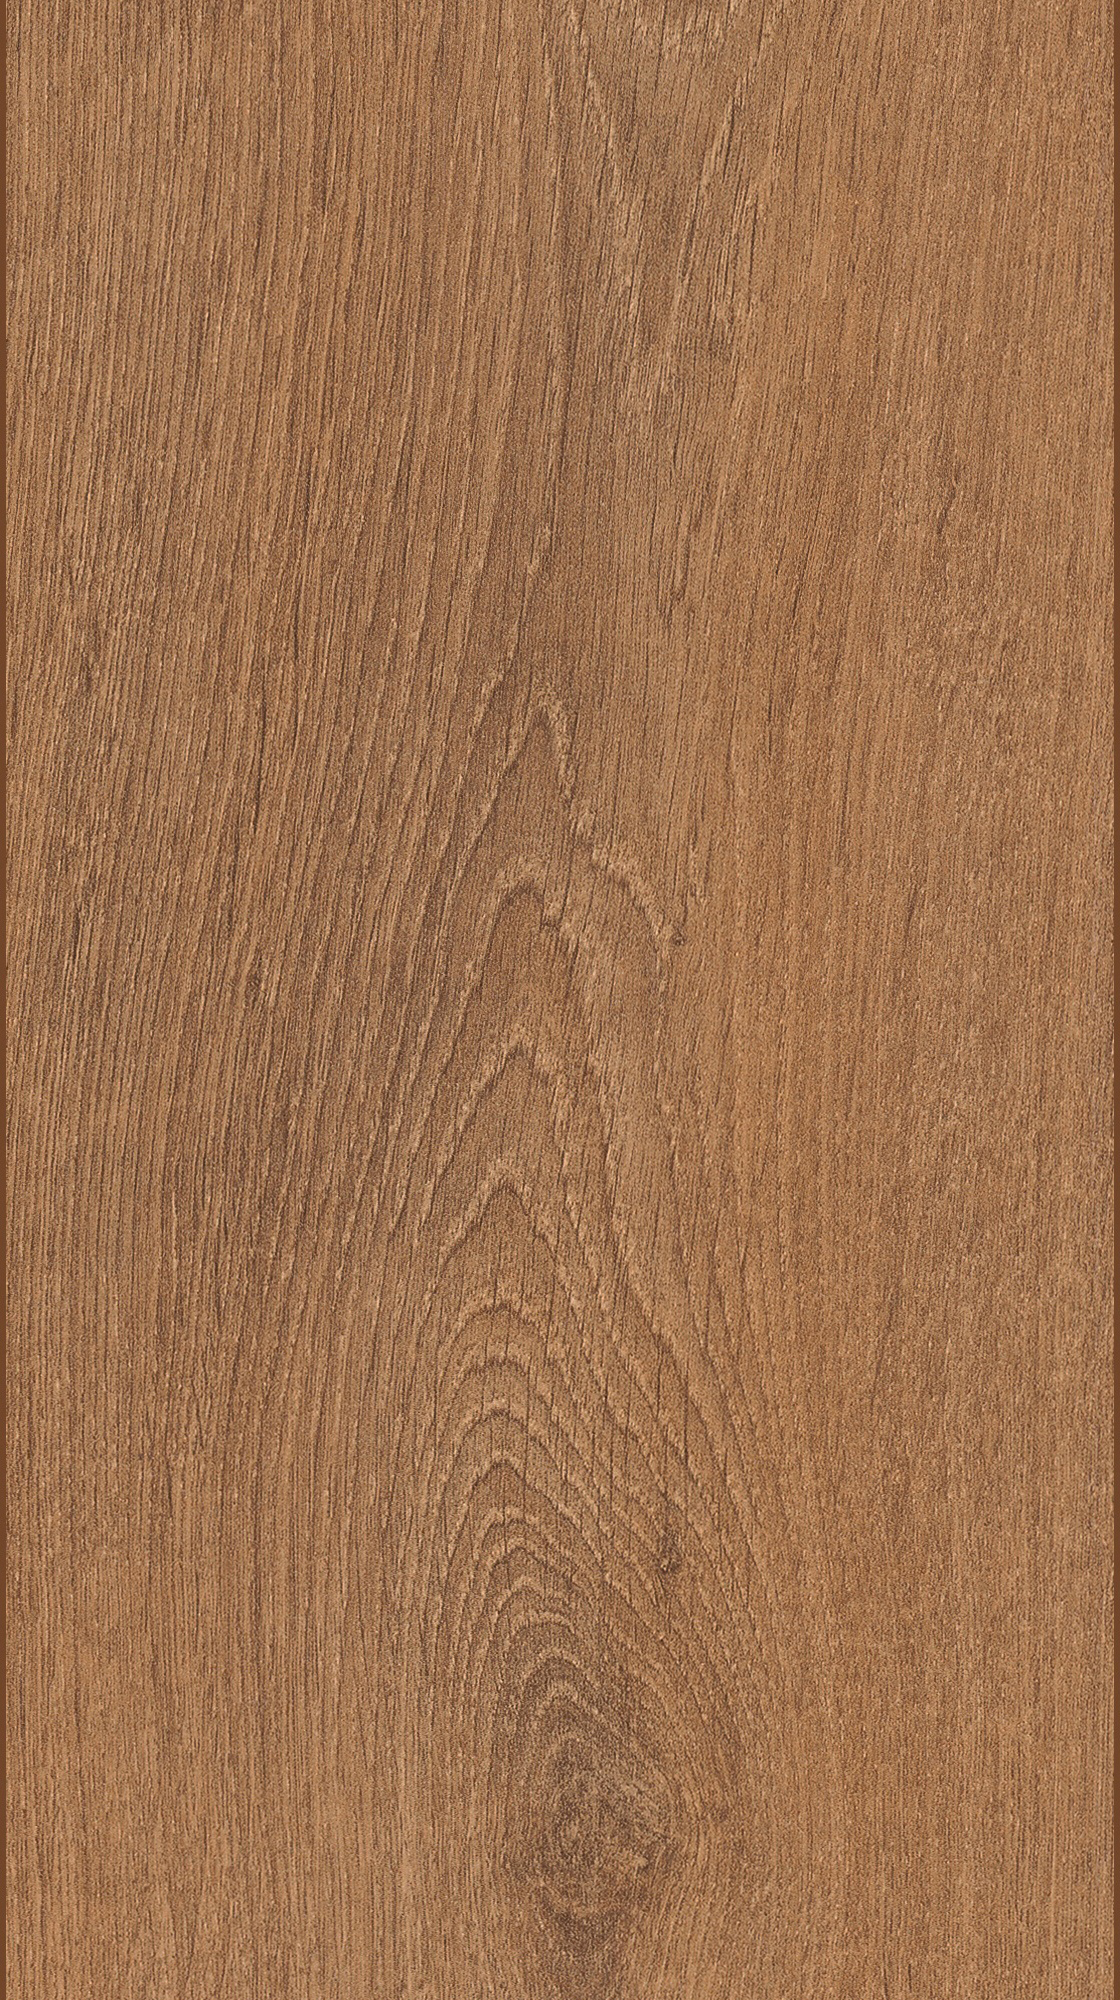 Rosedale Medium Oak 8mm Laminate Flooring - Sample